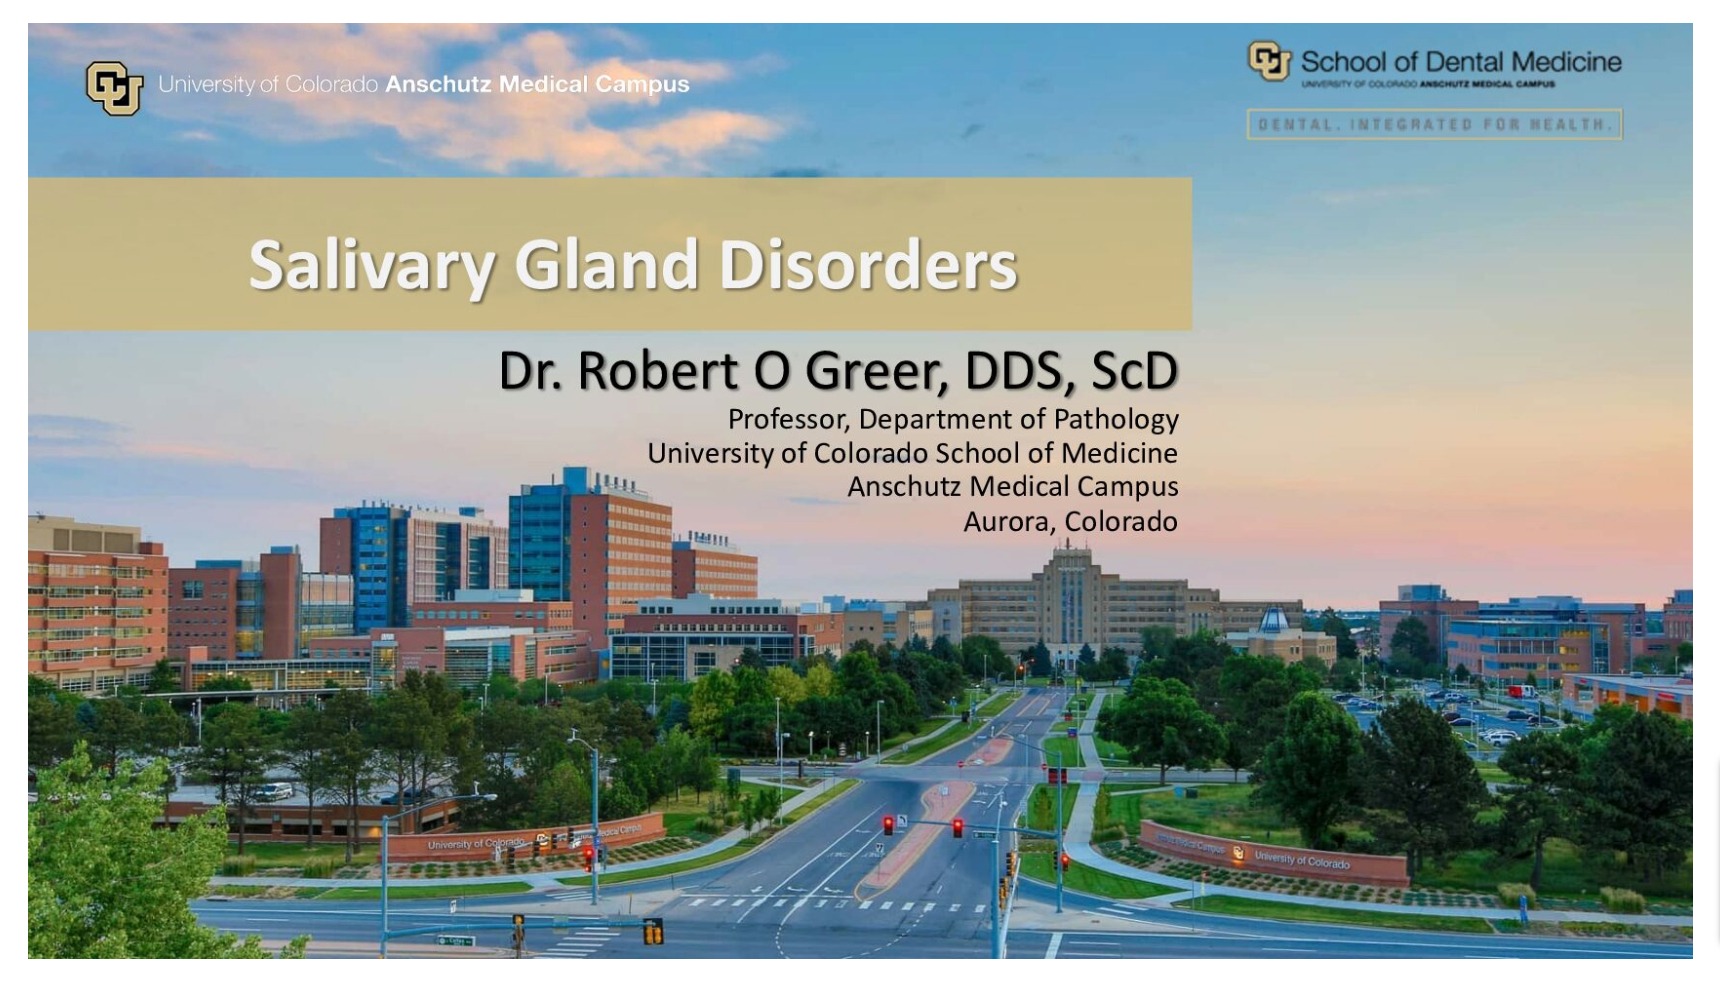 Salivary Gland Tumors- Diagnosis, Surgeries, and Reconstruction